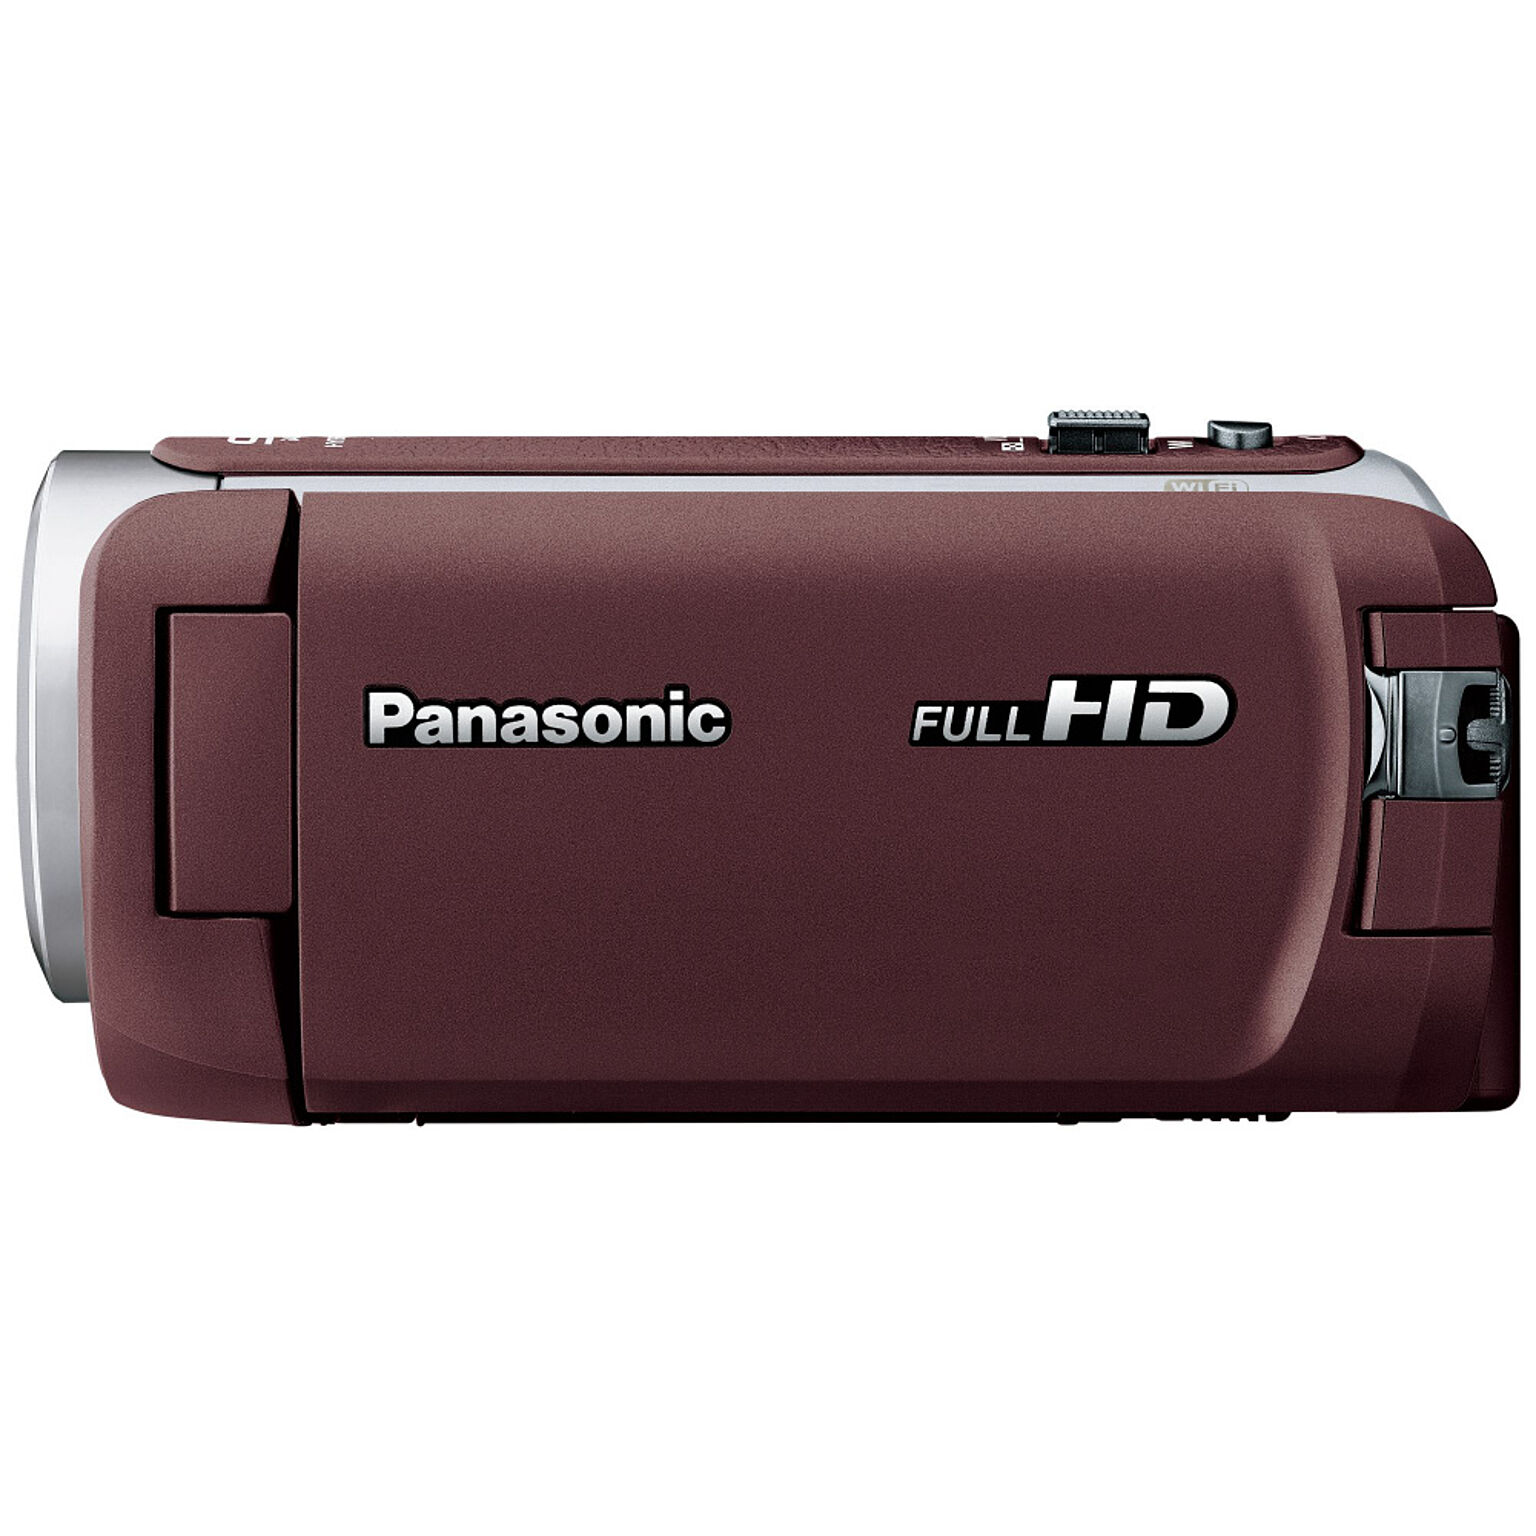 Panasonic(パナソニック) パナソニック HDビデオカメラ 64GB ワイプ撮り 高倍率90倍ズーム ブラウン HC-W590MS-T